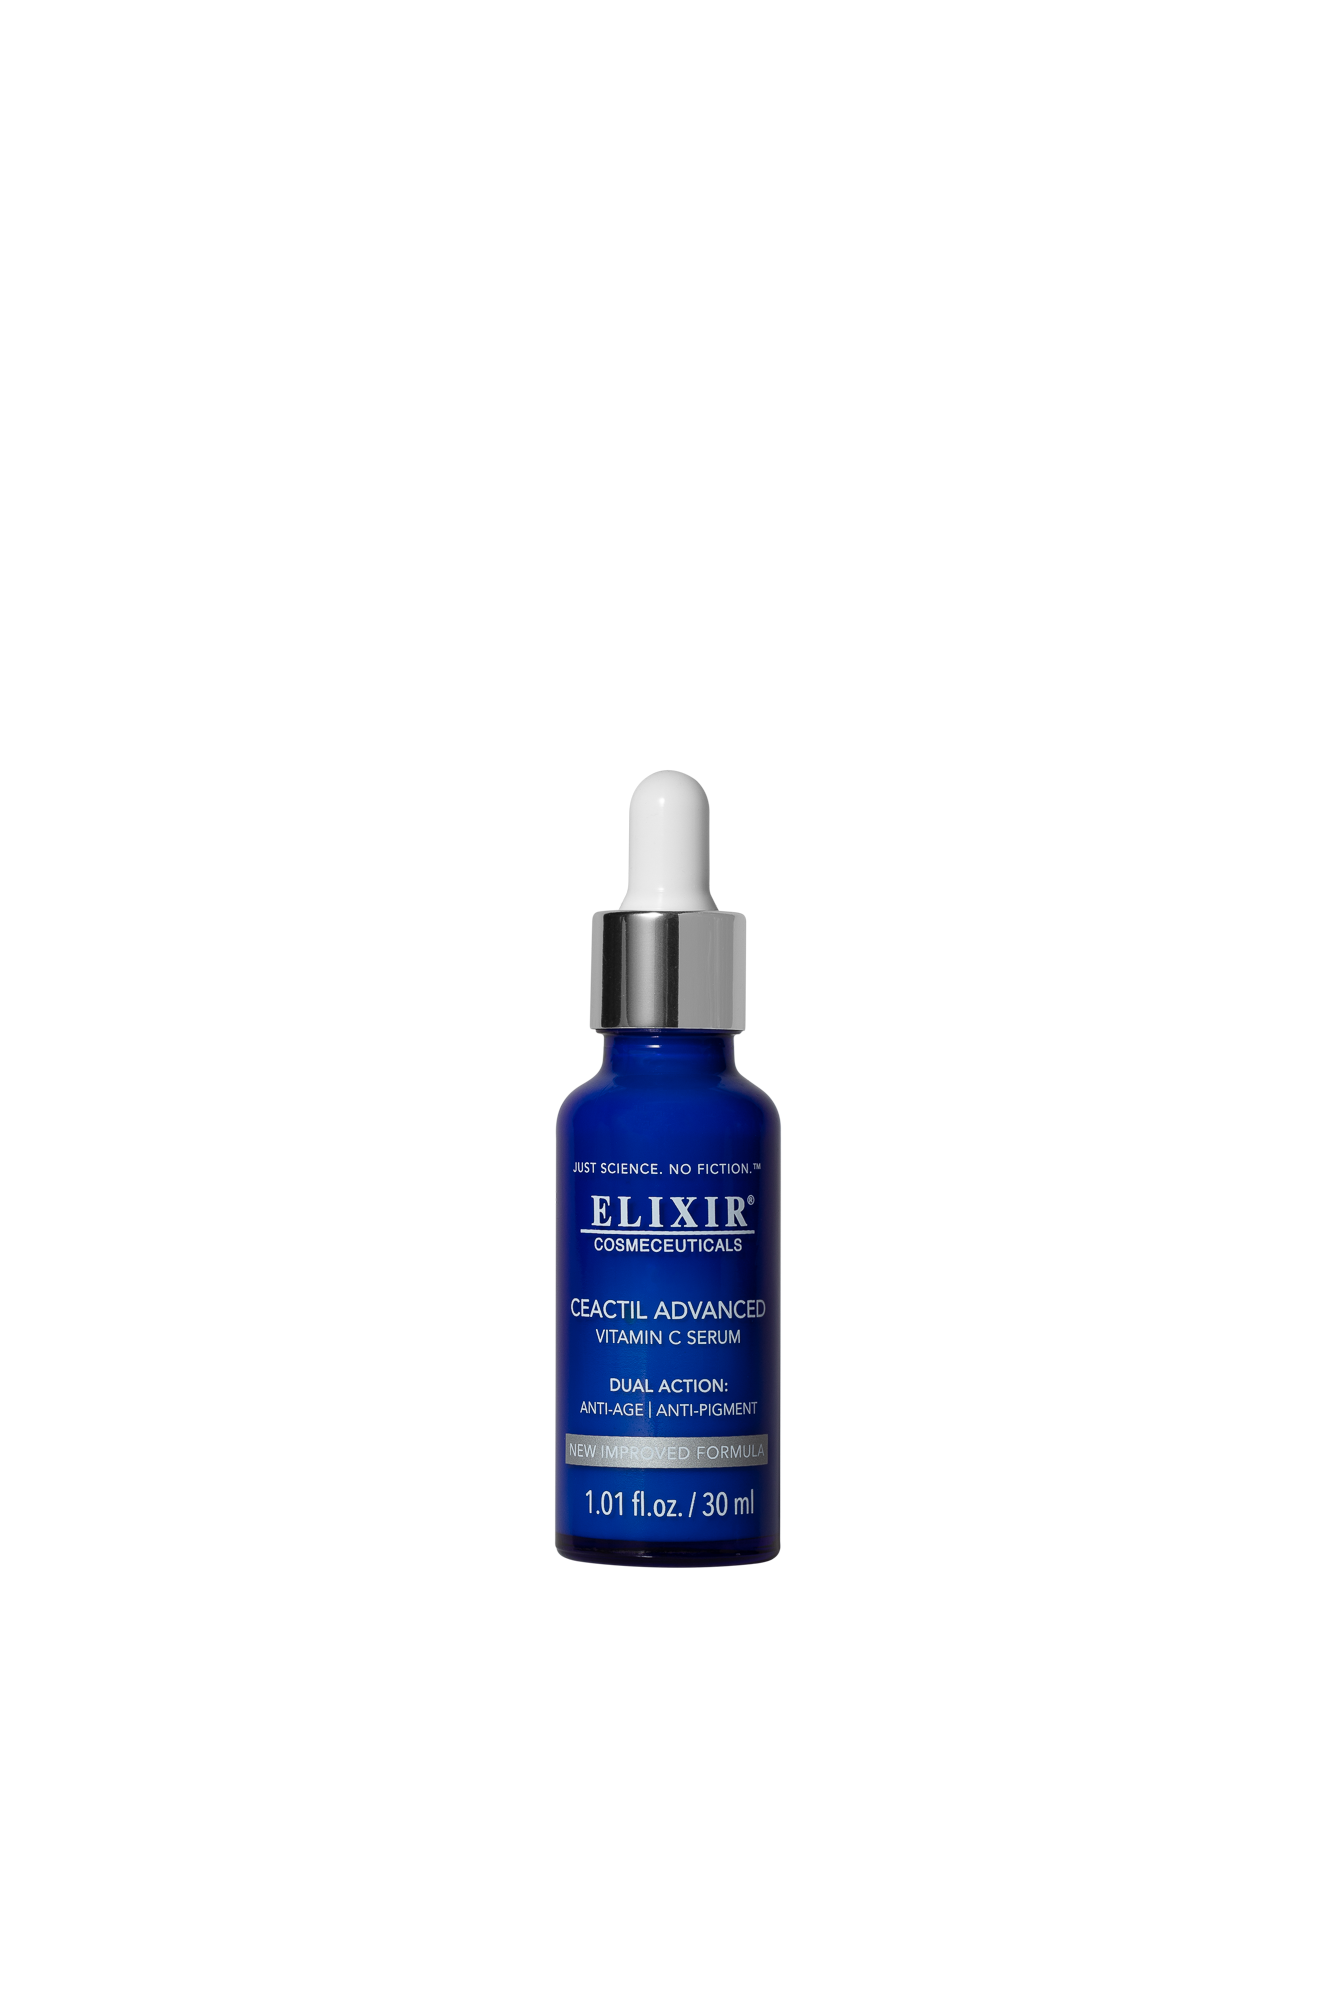 Elixir Ceactil Advanced Vitamin C serum – 30 ml